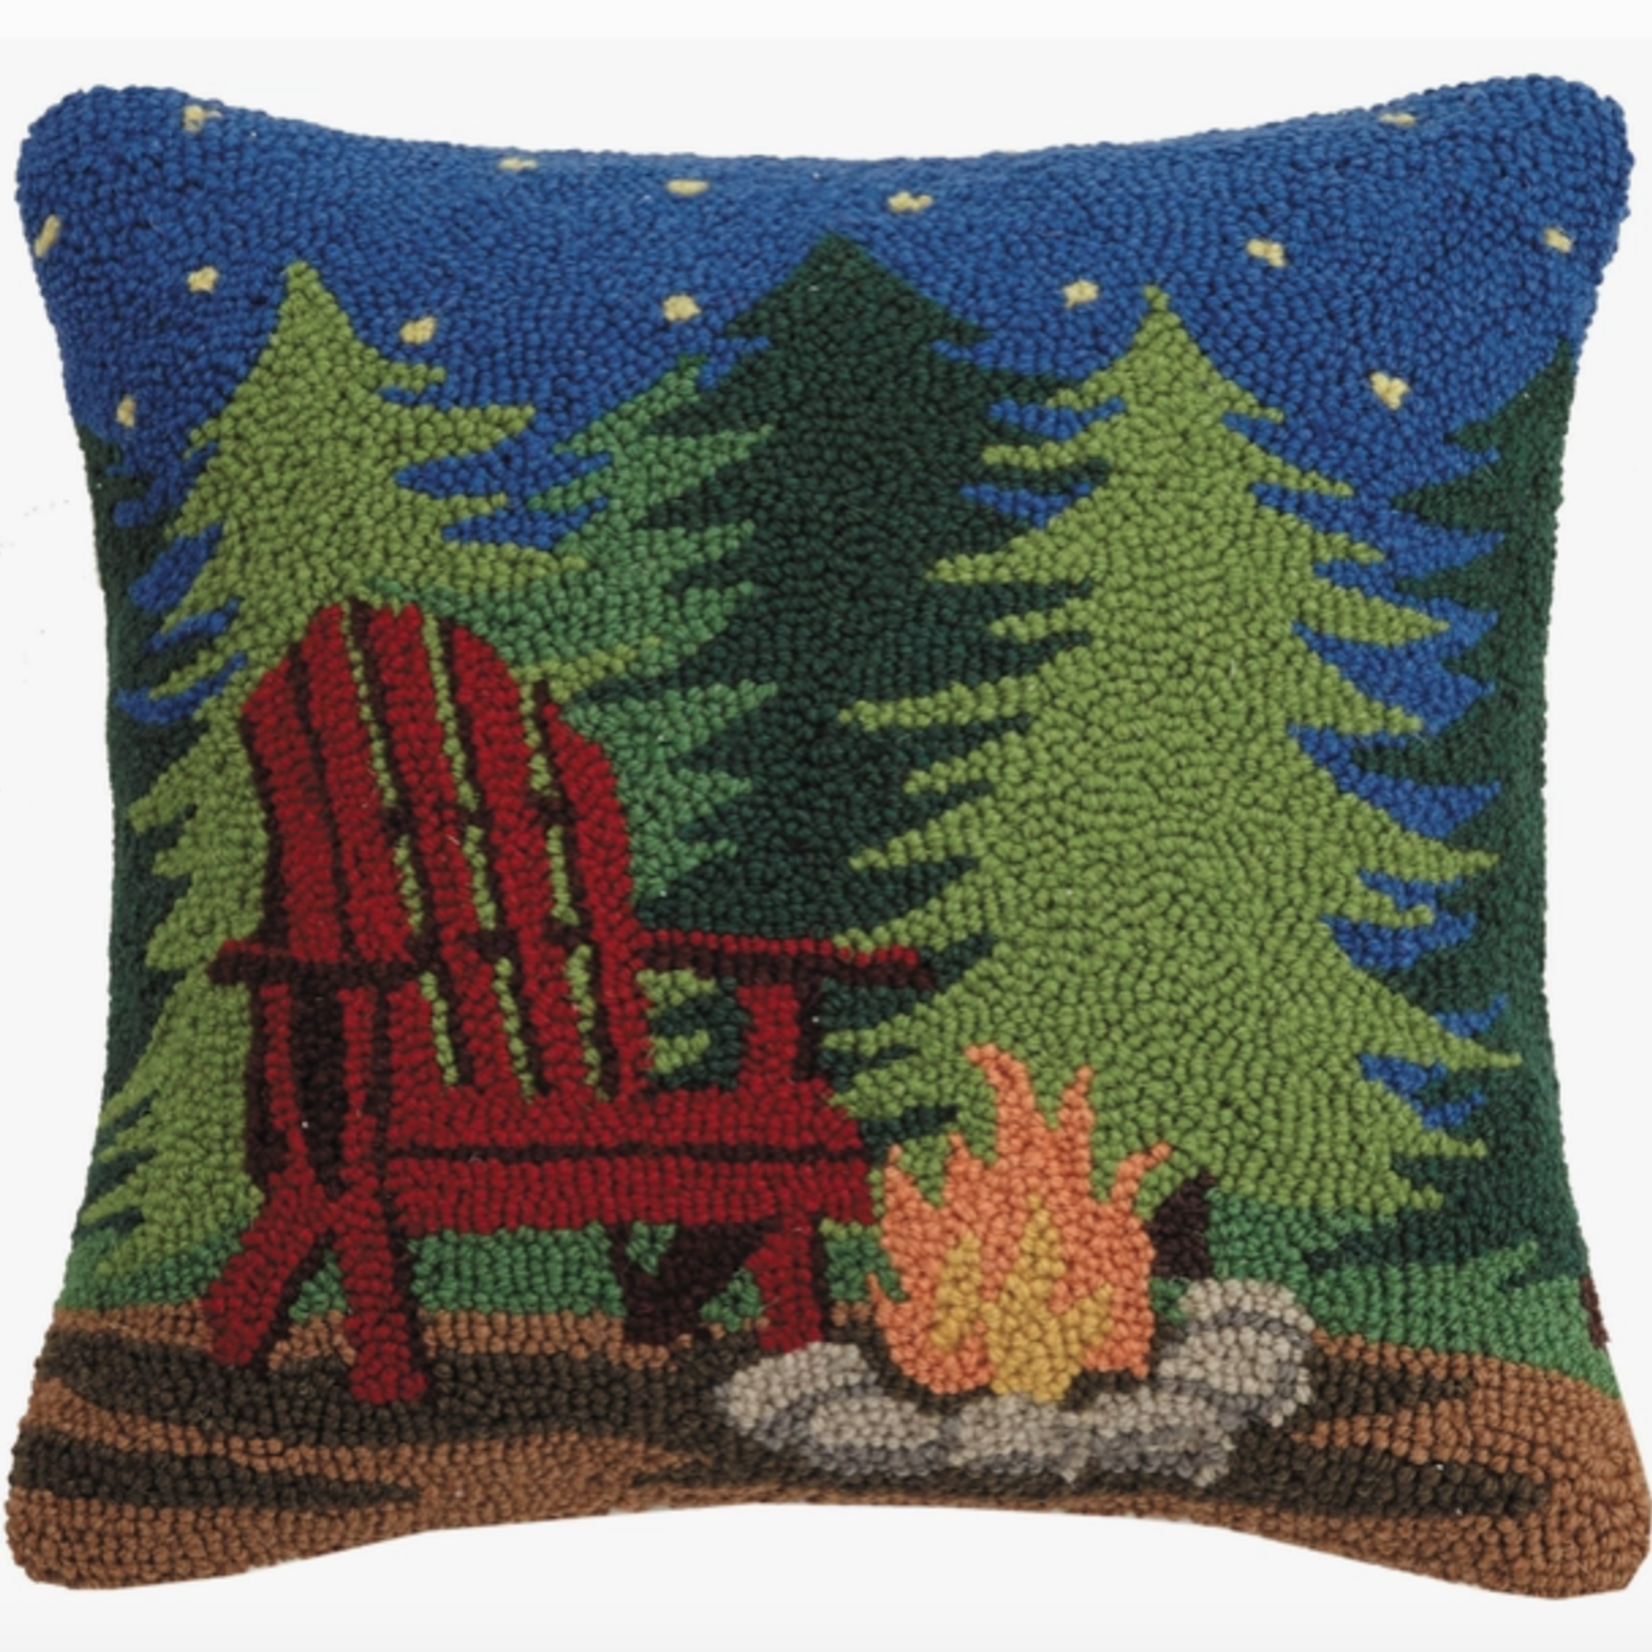 Pillows - Hooked Campfire Scene Pillow